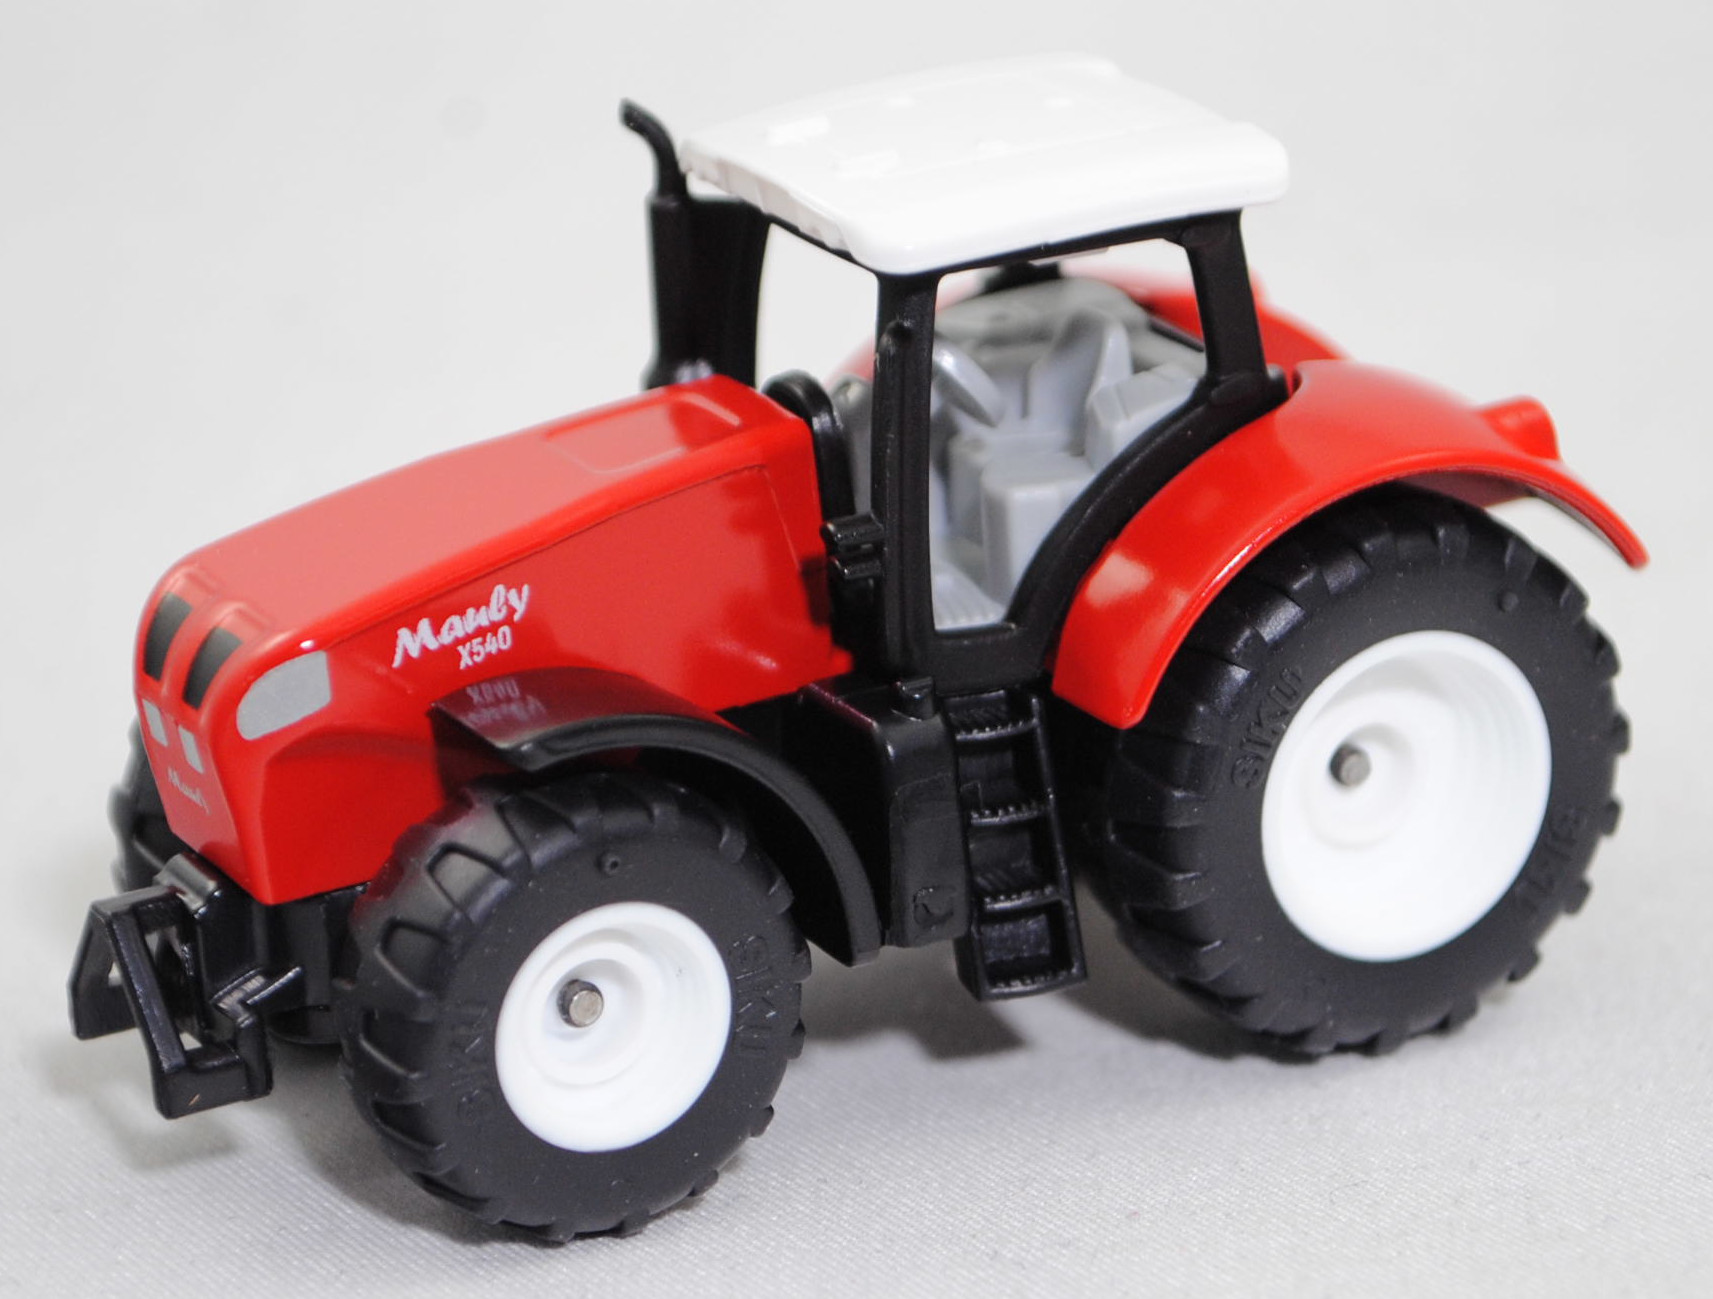 00001 Mauly X540 Traktor, verkehrsrot, Dach weiß, Druck Mauly (5 mm breit) in silber vorne, SIKU, P29e